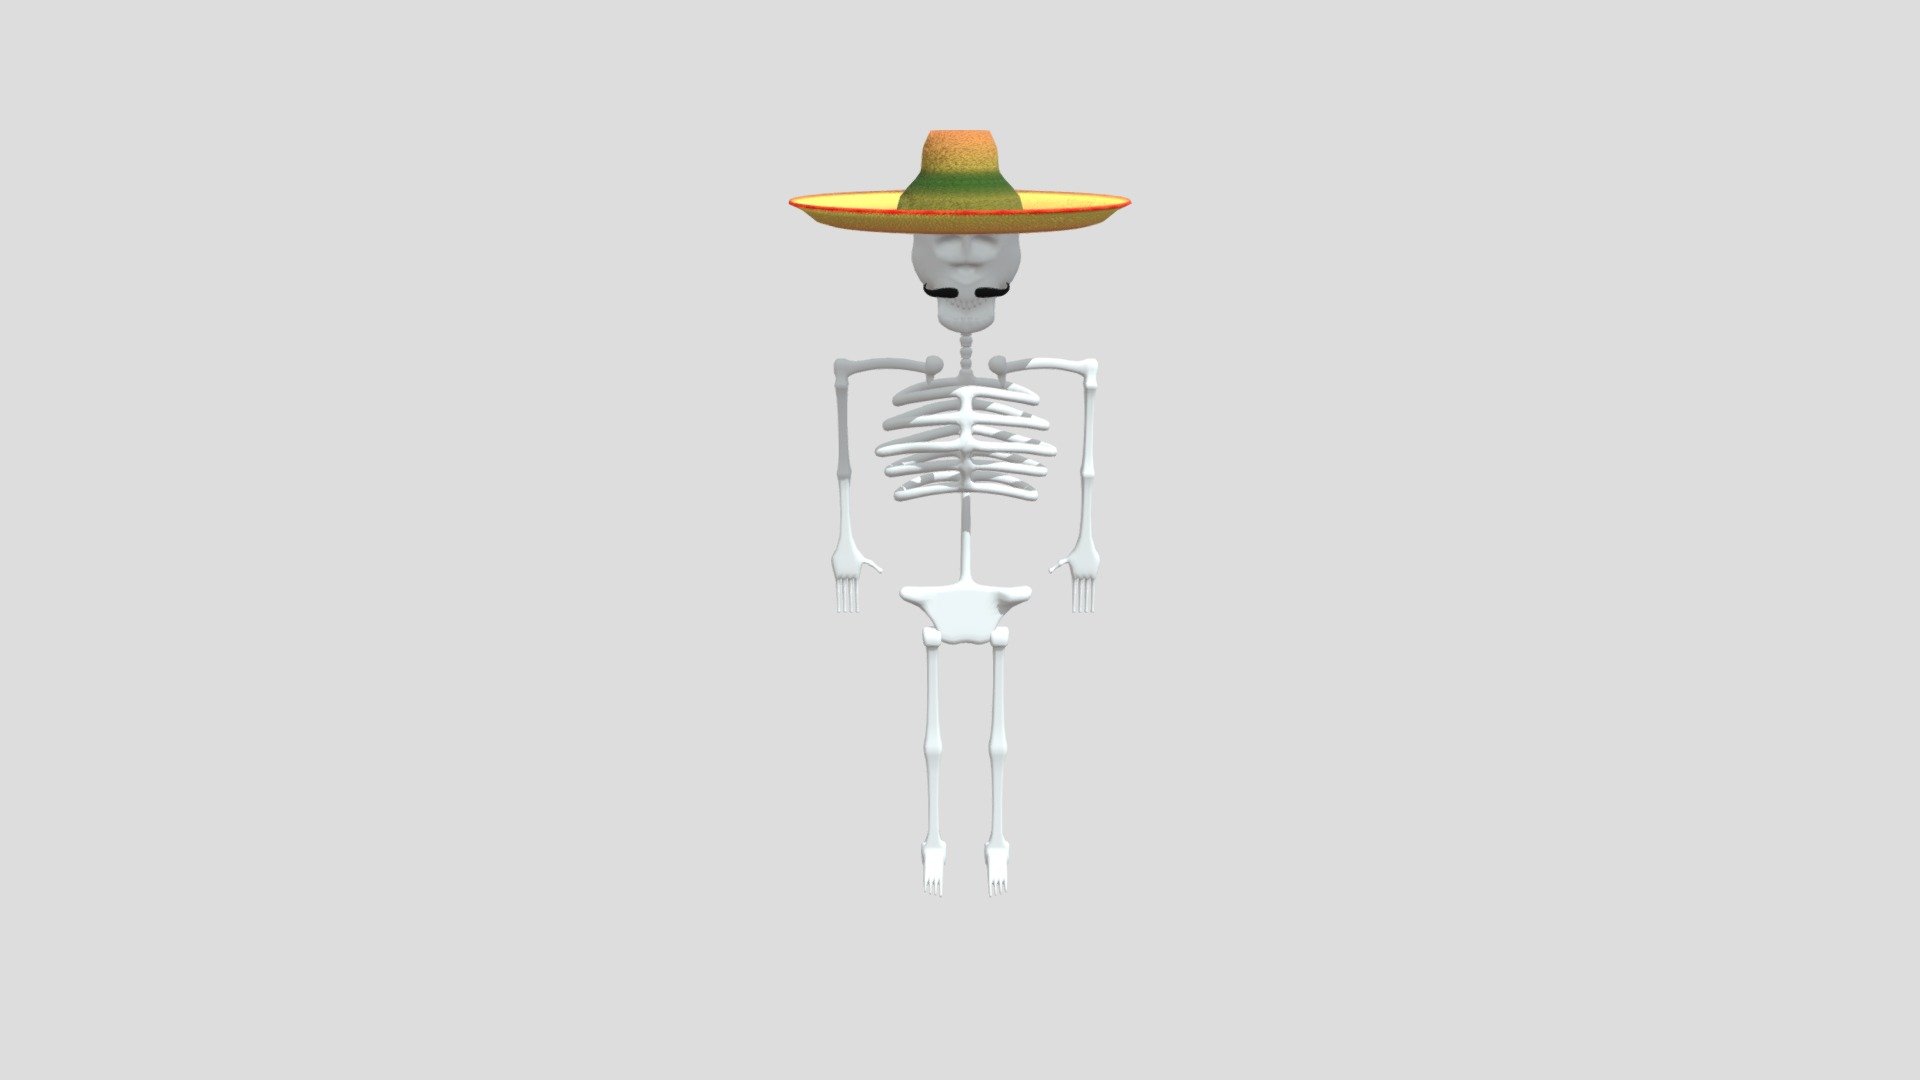 Mexican Skeleton